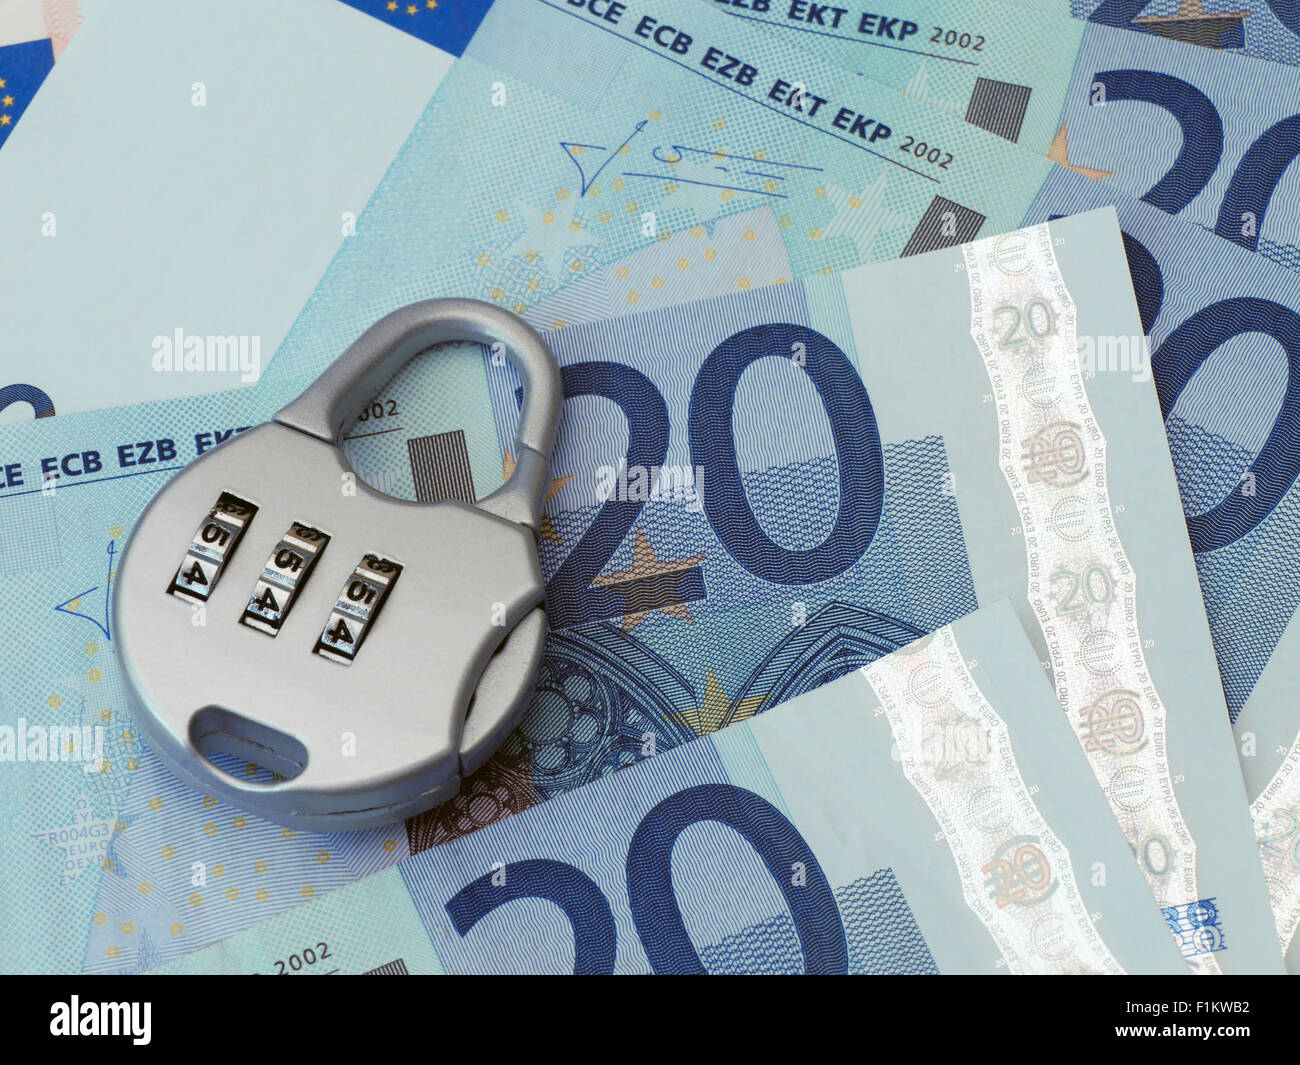 Combination padlock rests on Twenty Euro banknotes Stock Photo